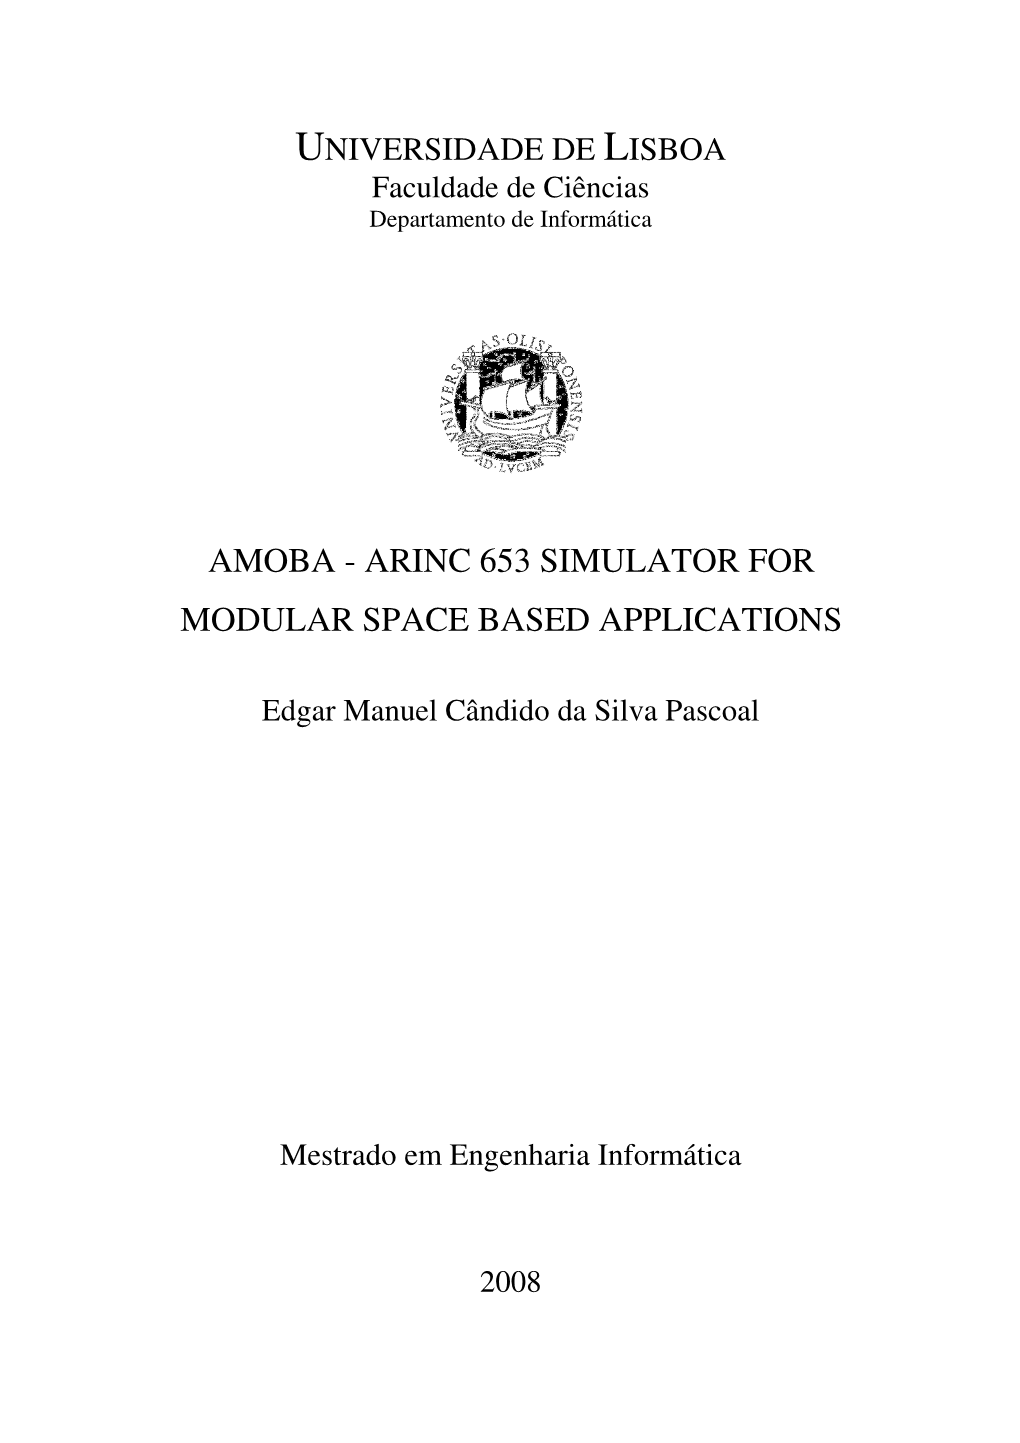 Amoba - Arinc 653 Simulator for Modular Space Based Applications